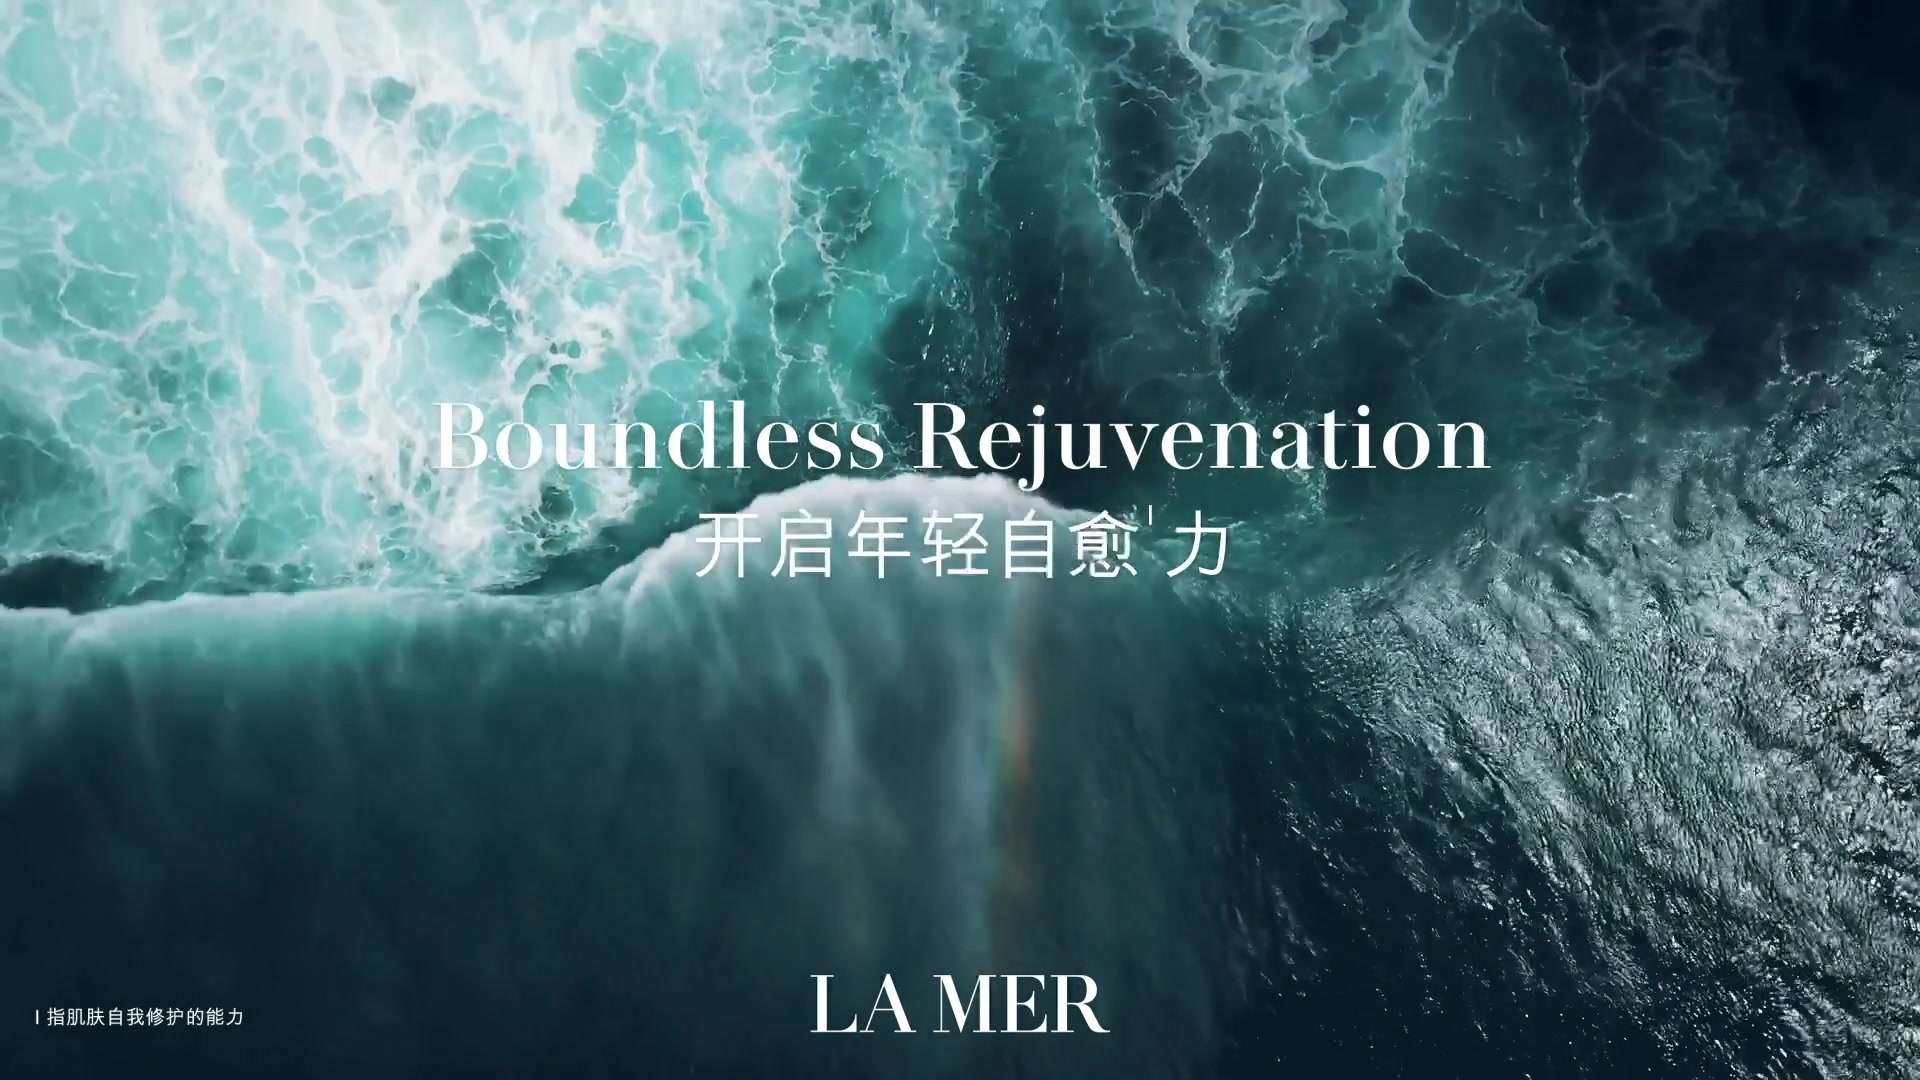 LAMER Boundless Rejuvenation Video